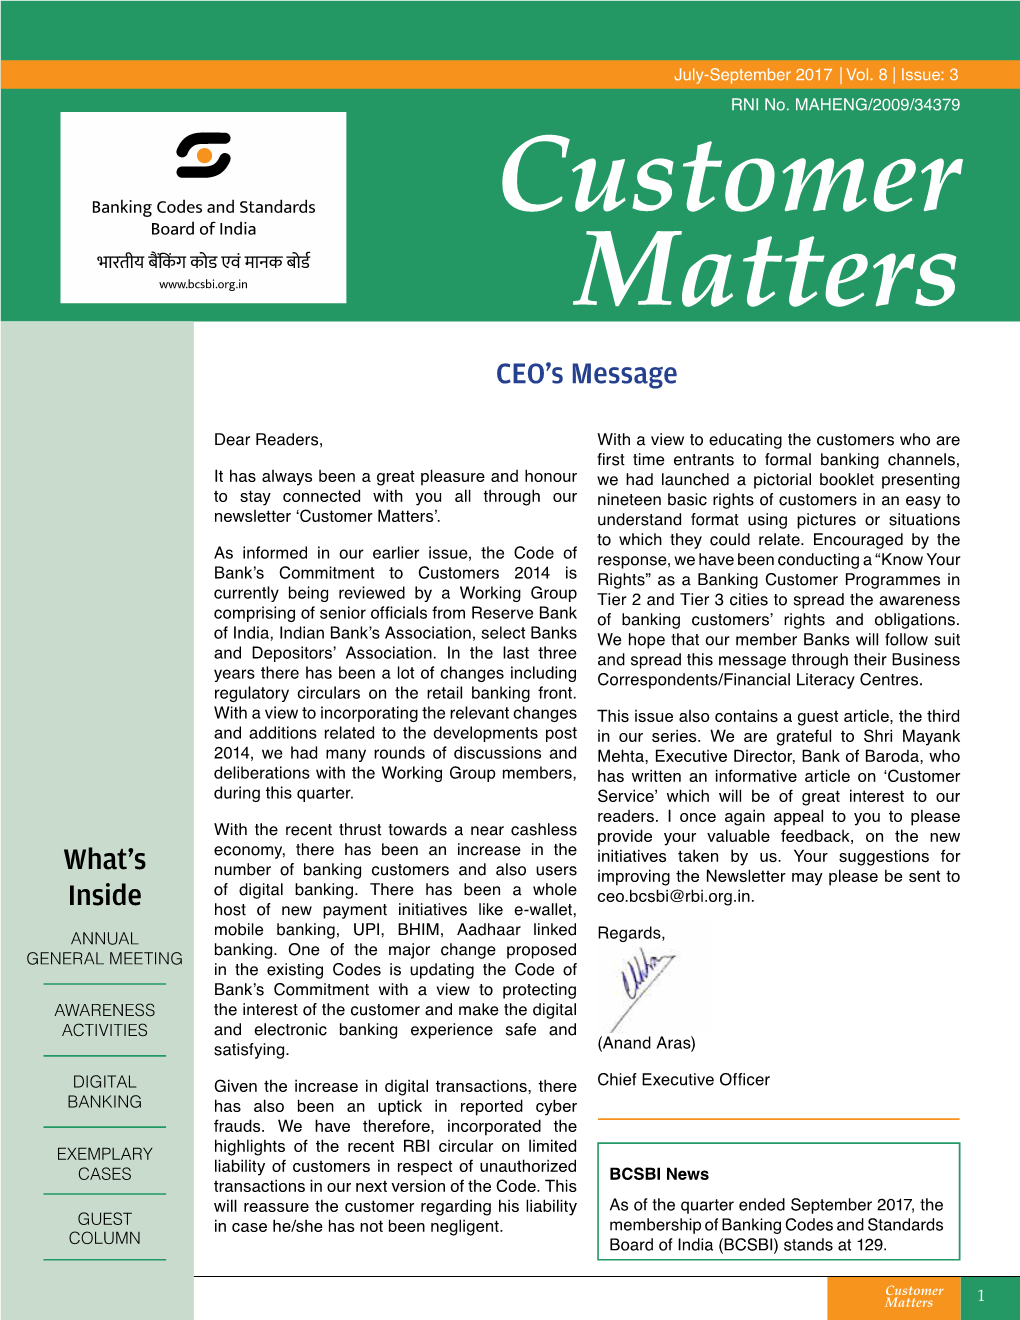 Customer Matters’